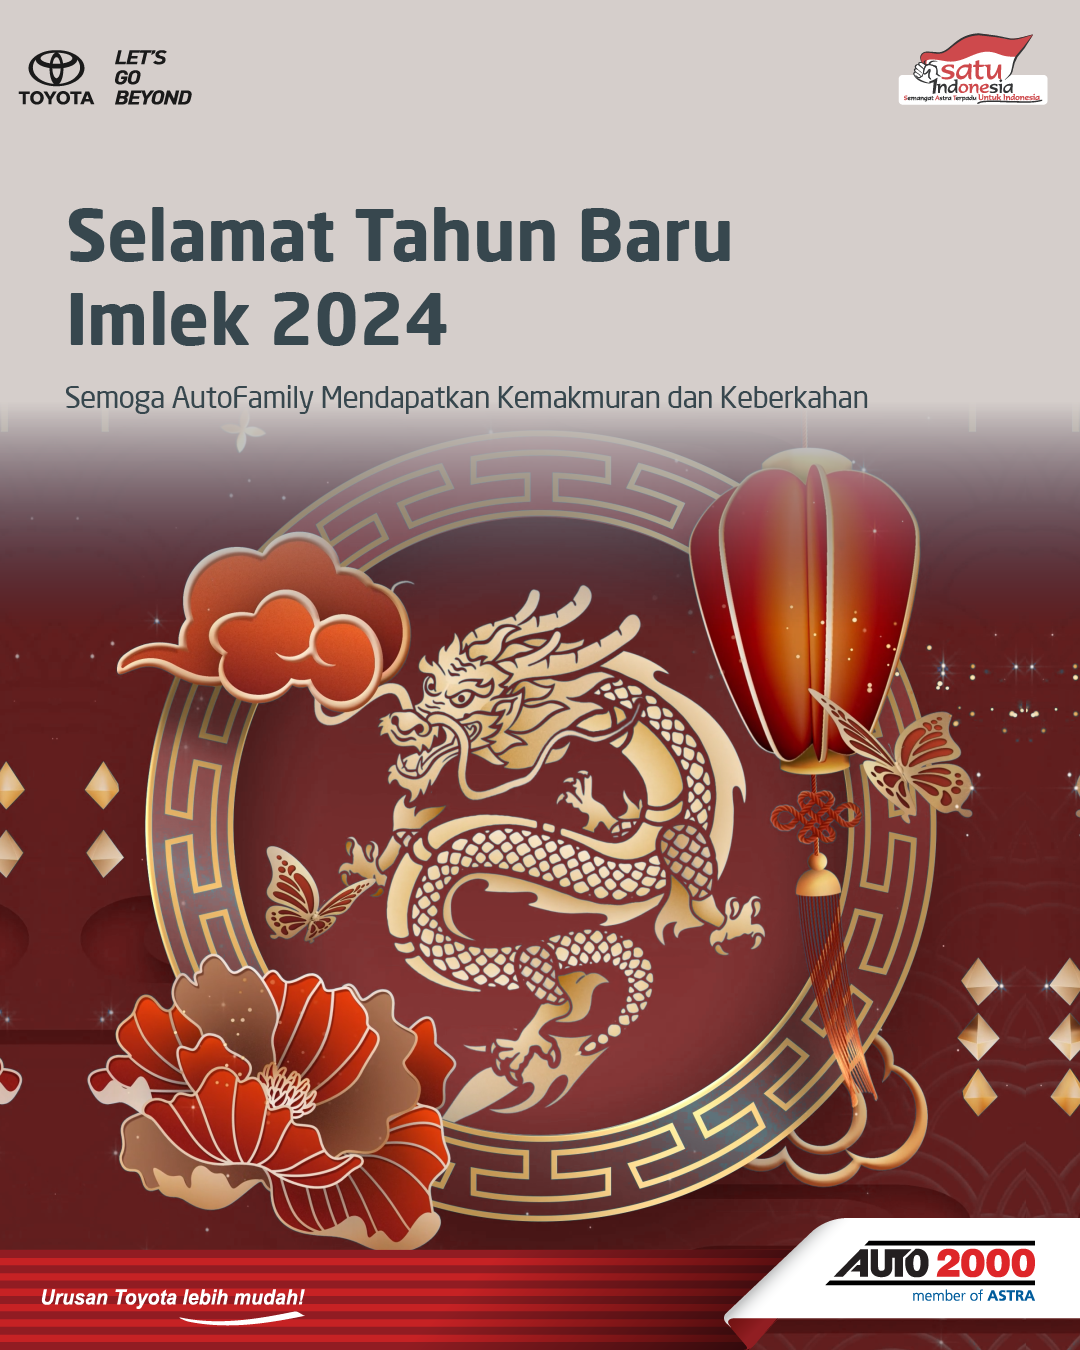 SELAMAT-TAHUN-BARU-IMLEK-2024-2141_1000584730.png